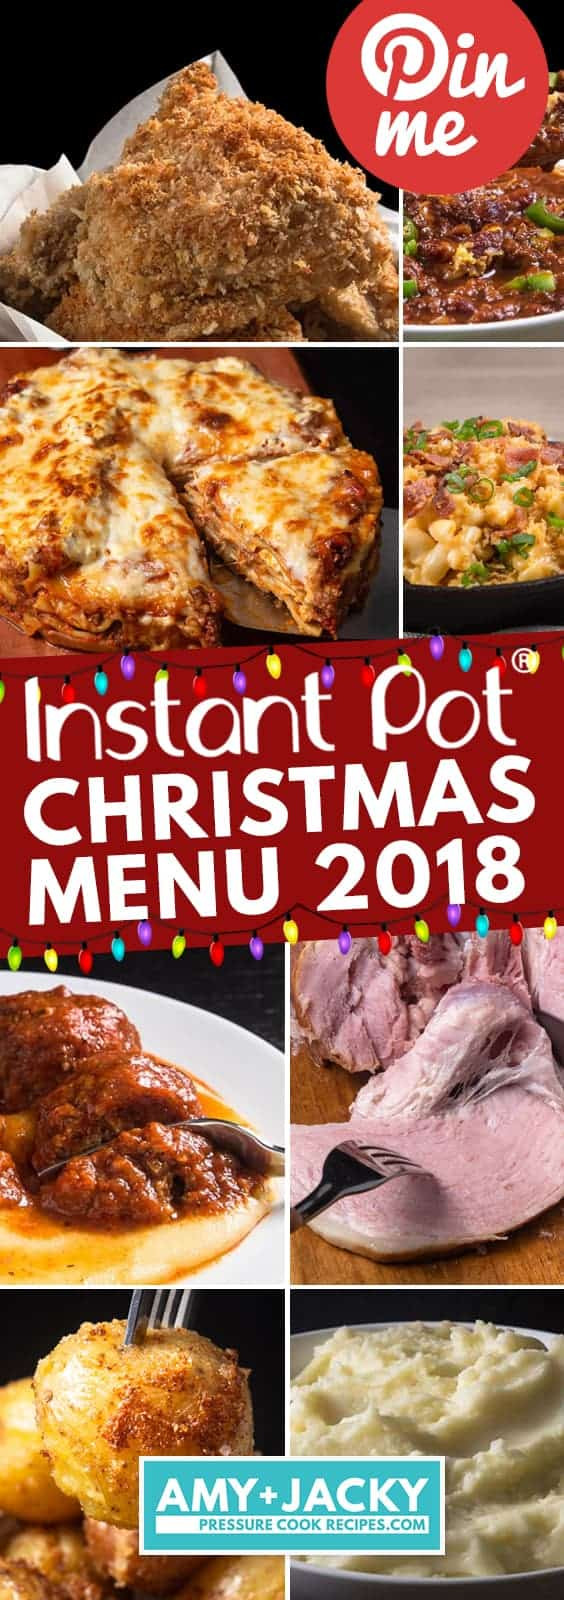 Instant Pot Holiday Recipes
 50 Instant Pot Christmas Recipes